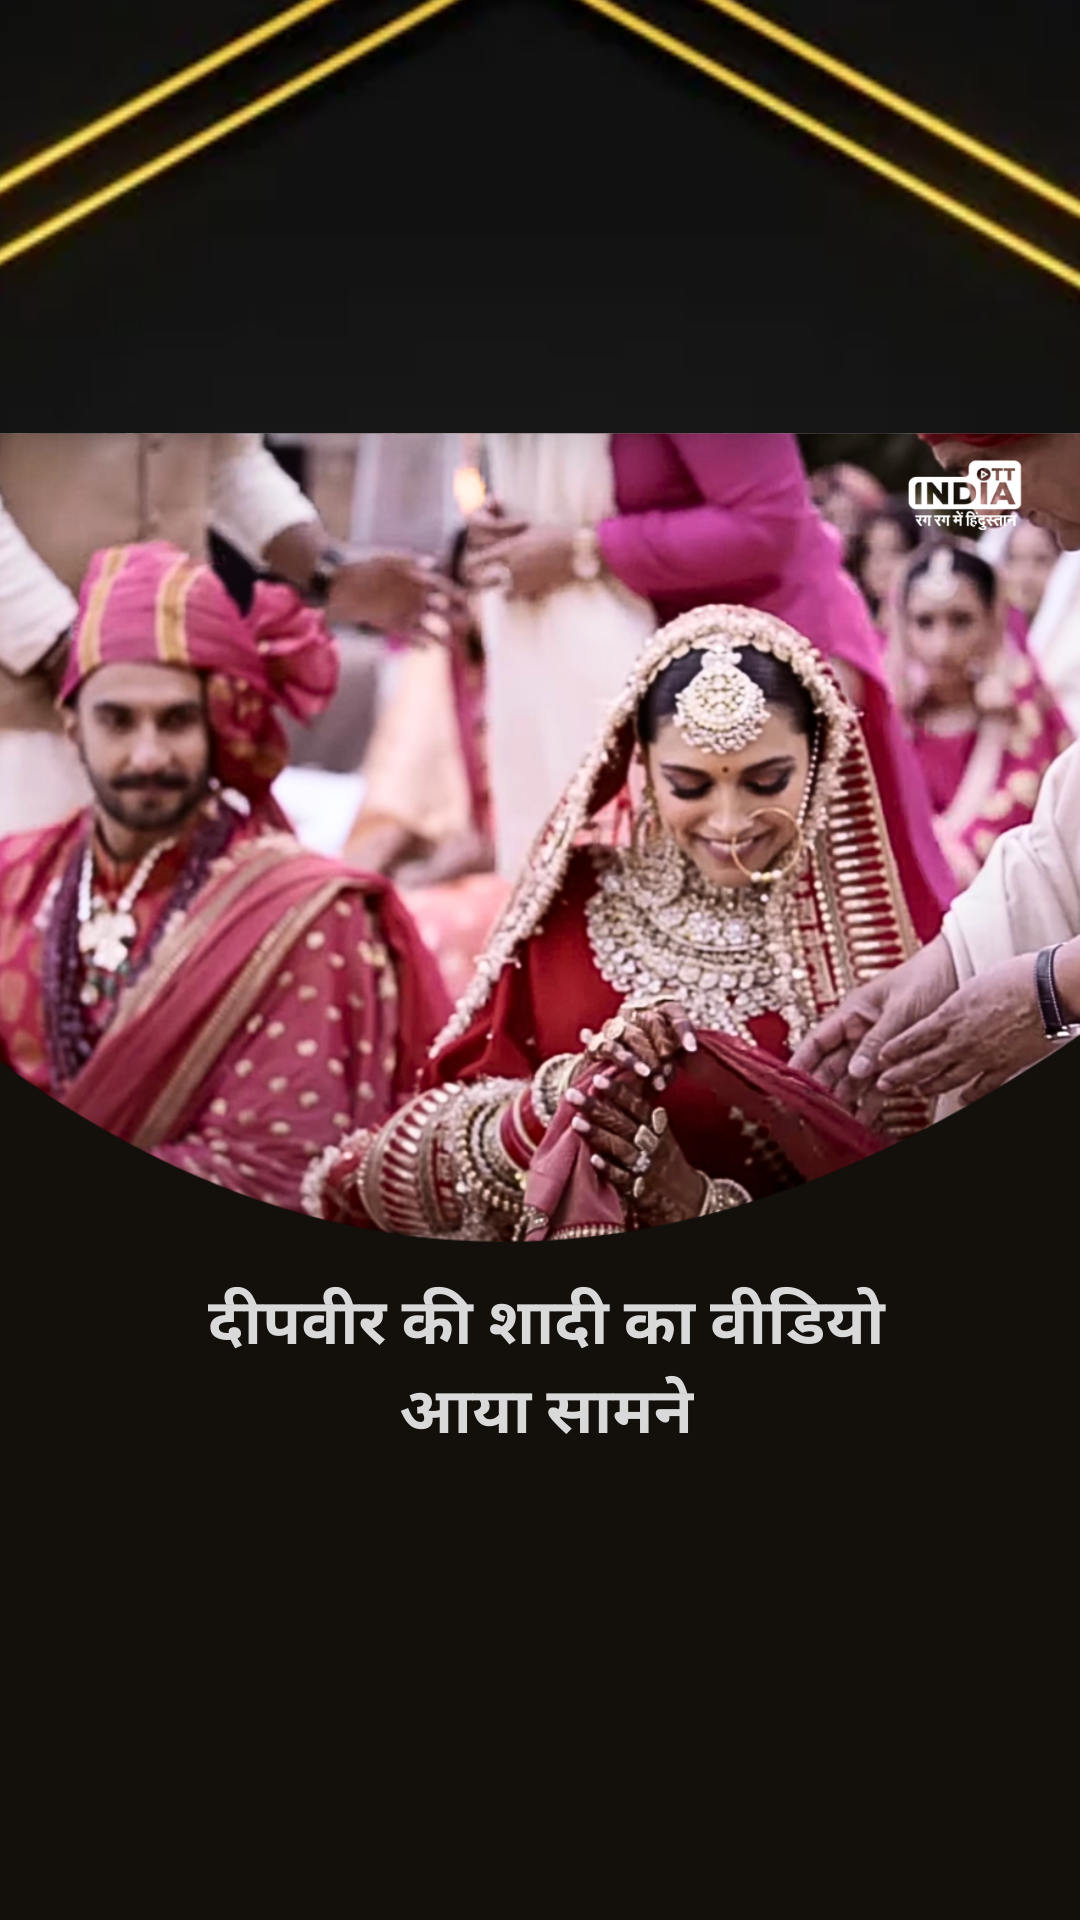 Deepika Ranveer Wedding Video: Deepika Ranveer's wedding video surfaced, Ranveer is seen looking at Deepika at the engagement party